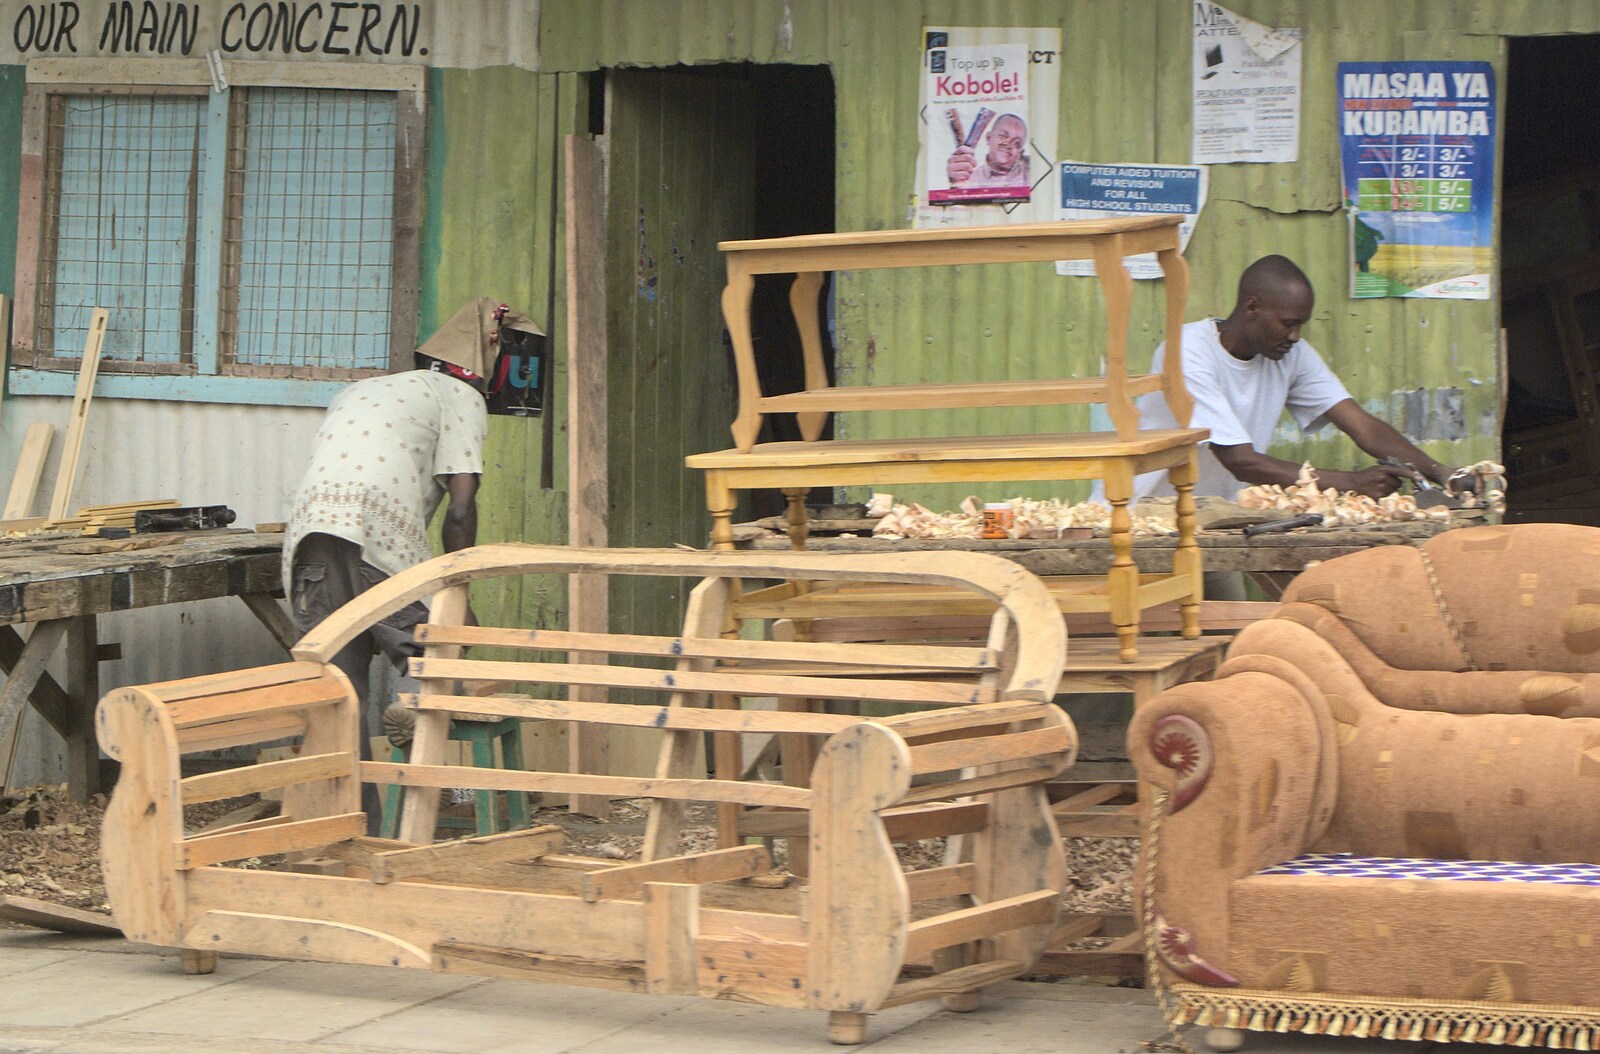 Some dudes make furniture by the roadside from Nairobi and the Road to Maasai Mara, Kenya, Africa - 1st November 2010